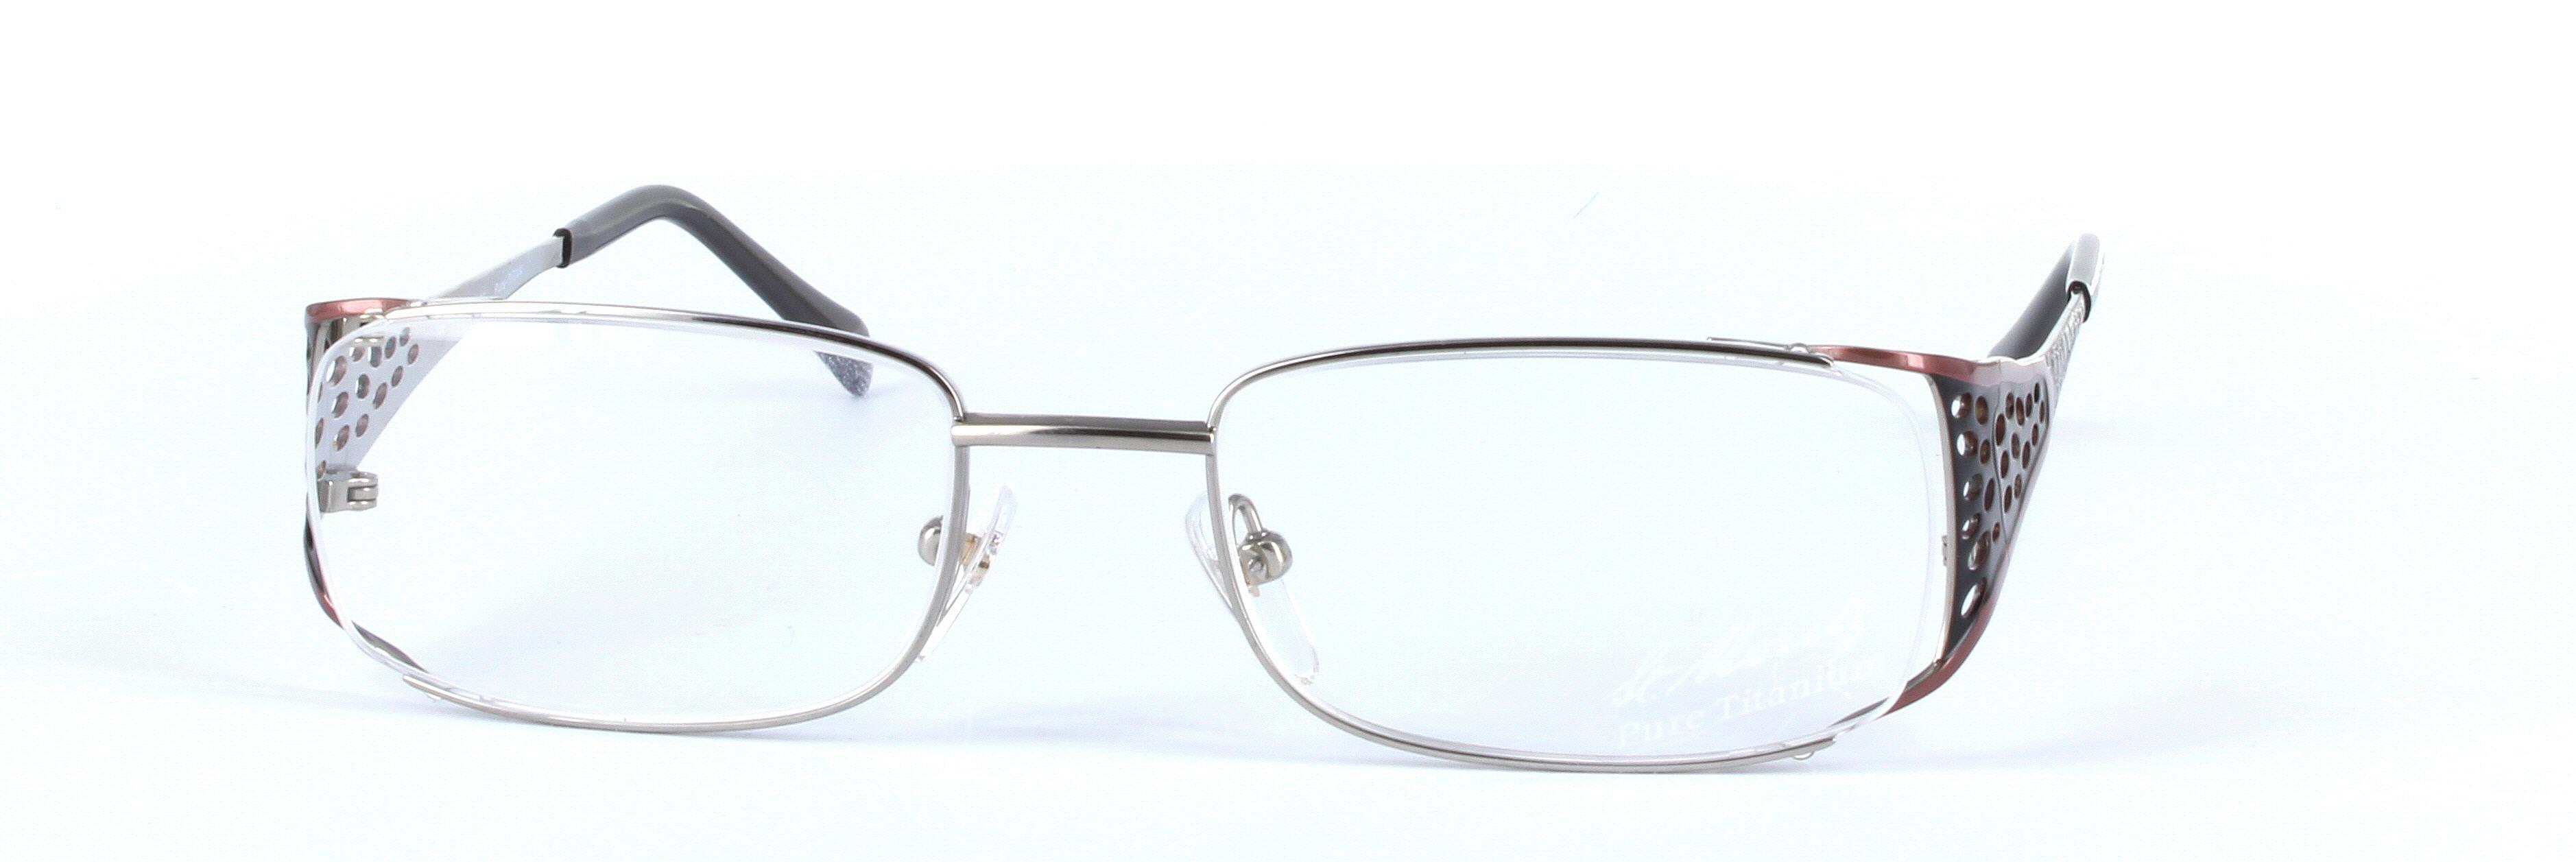 L'ART St-MORITZ (4782-003) Silver Full Rim Rectangular Metal Glasses - Image View 5